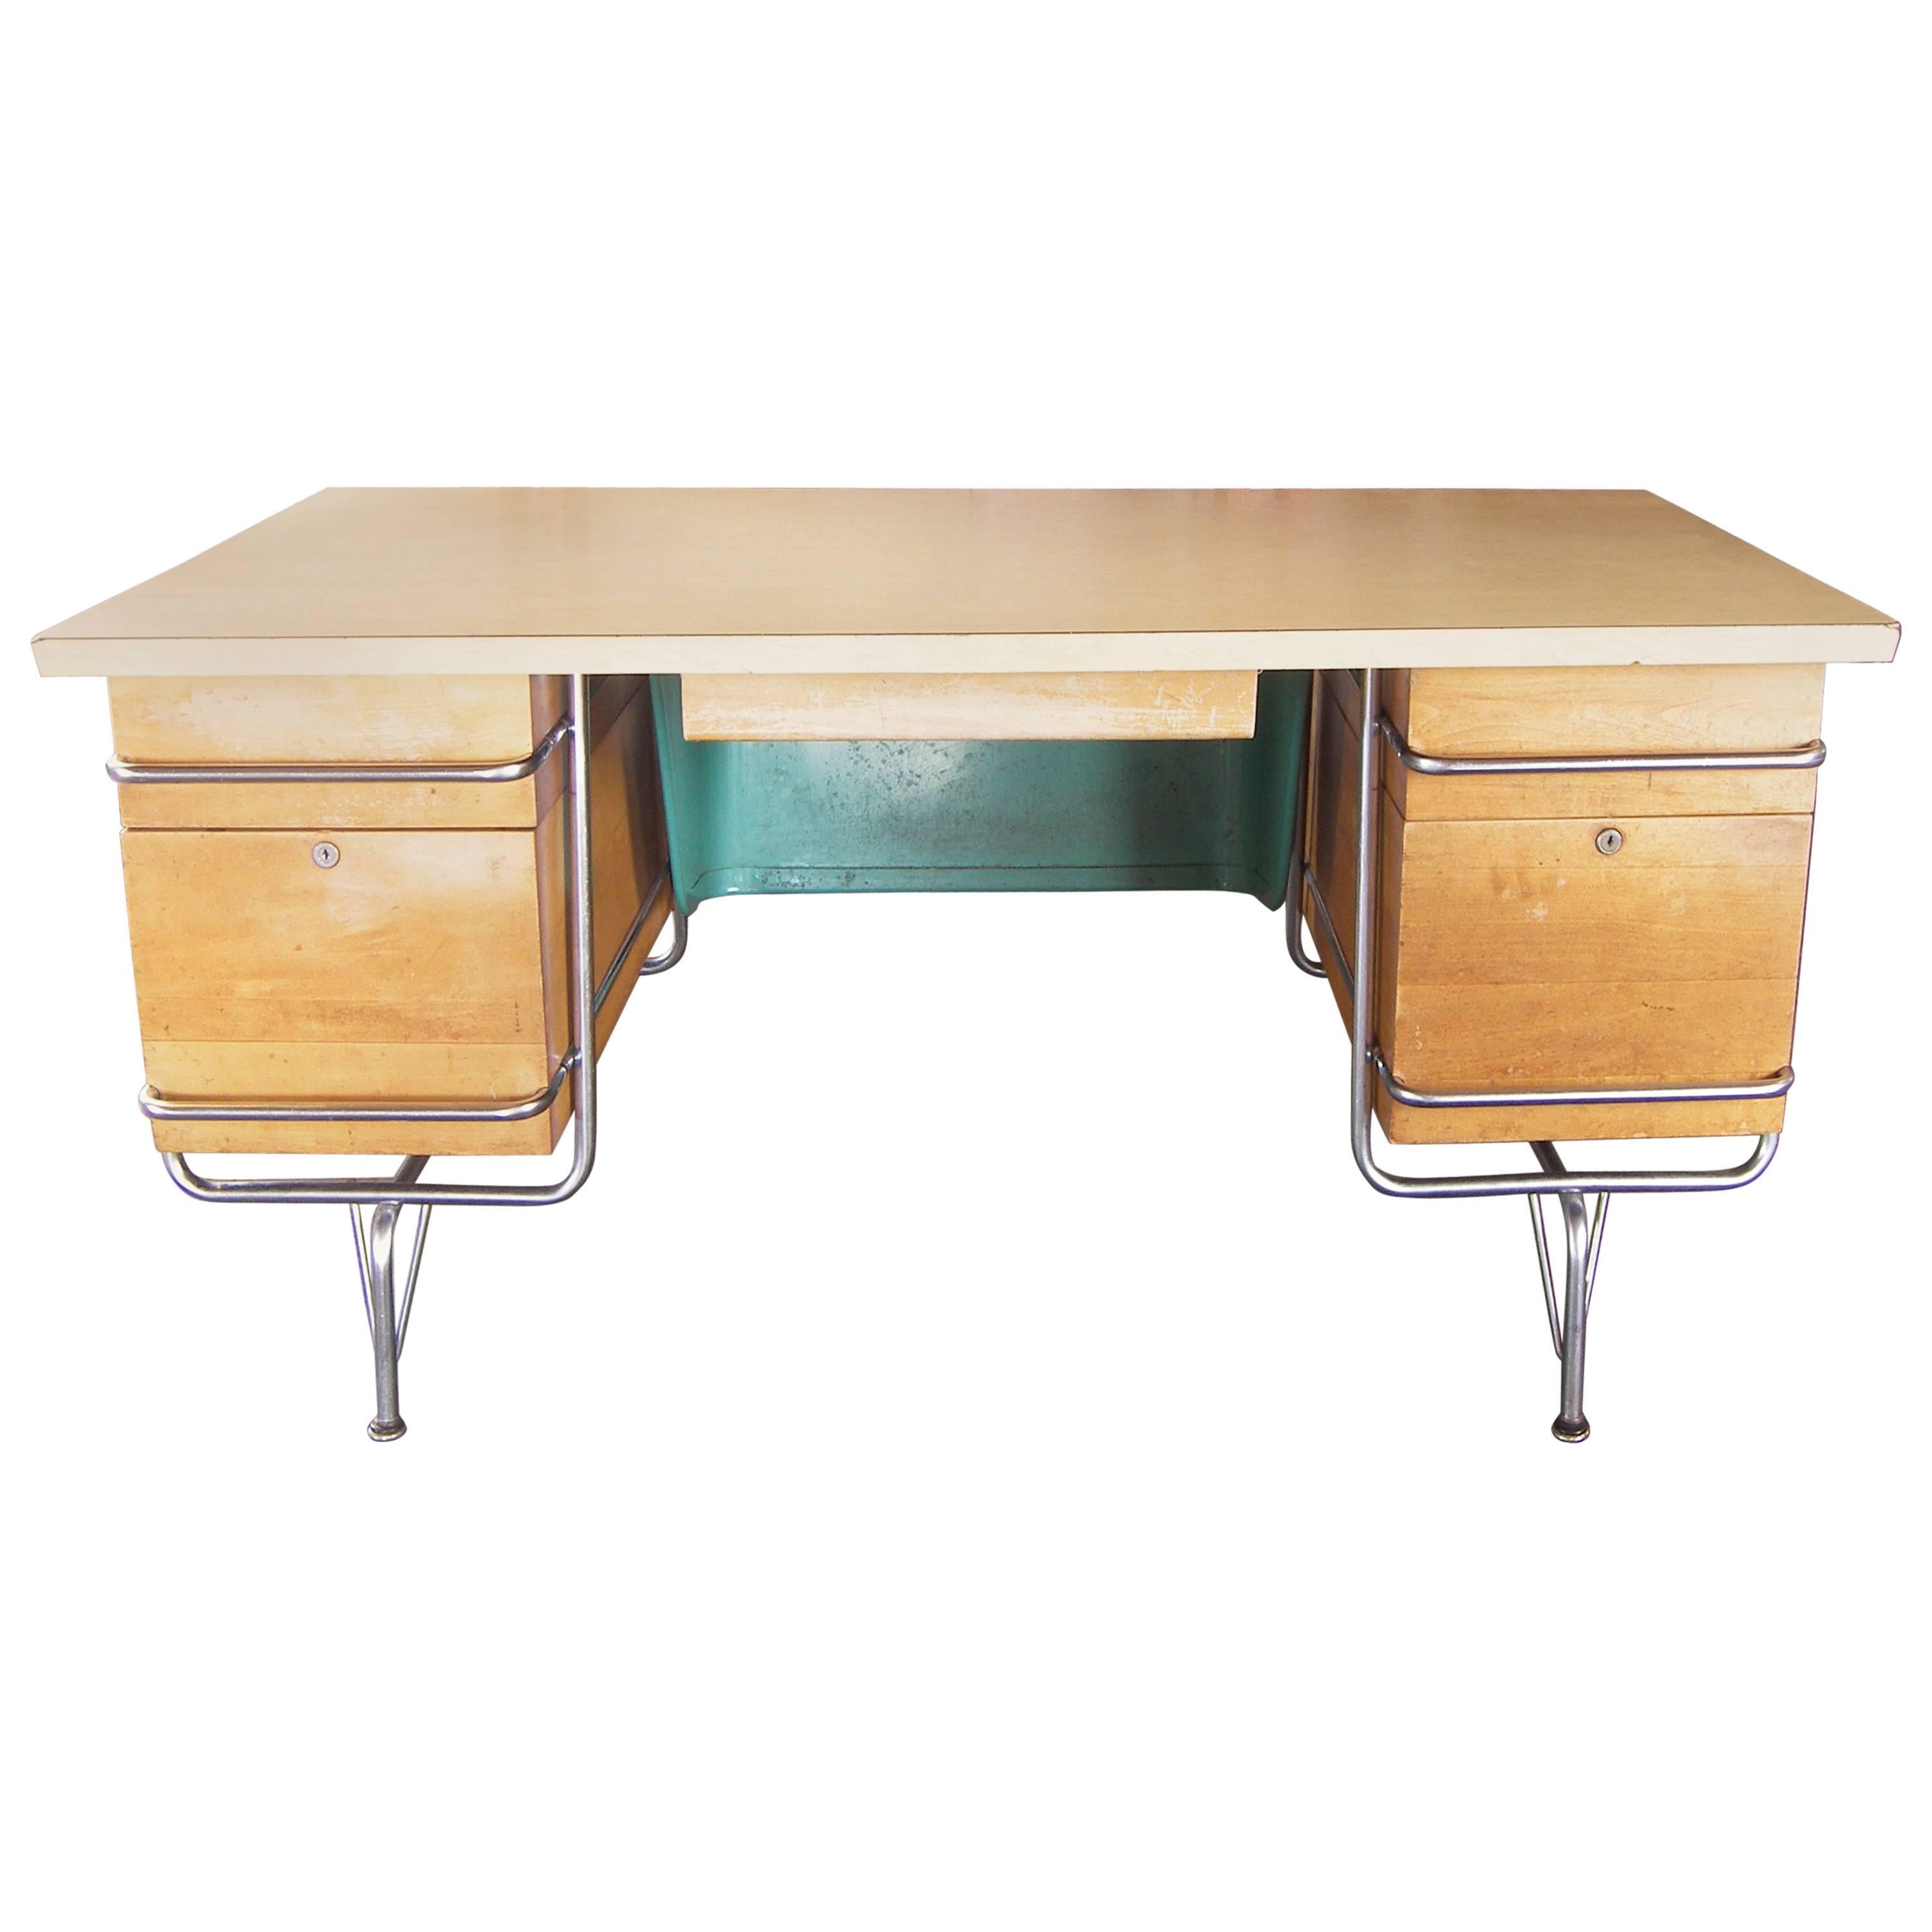 Heywood-Wakefield Desk, 1950s Mid-Century Modern Trimline Chrome and Wood